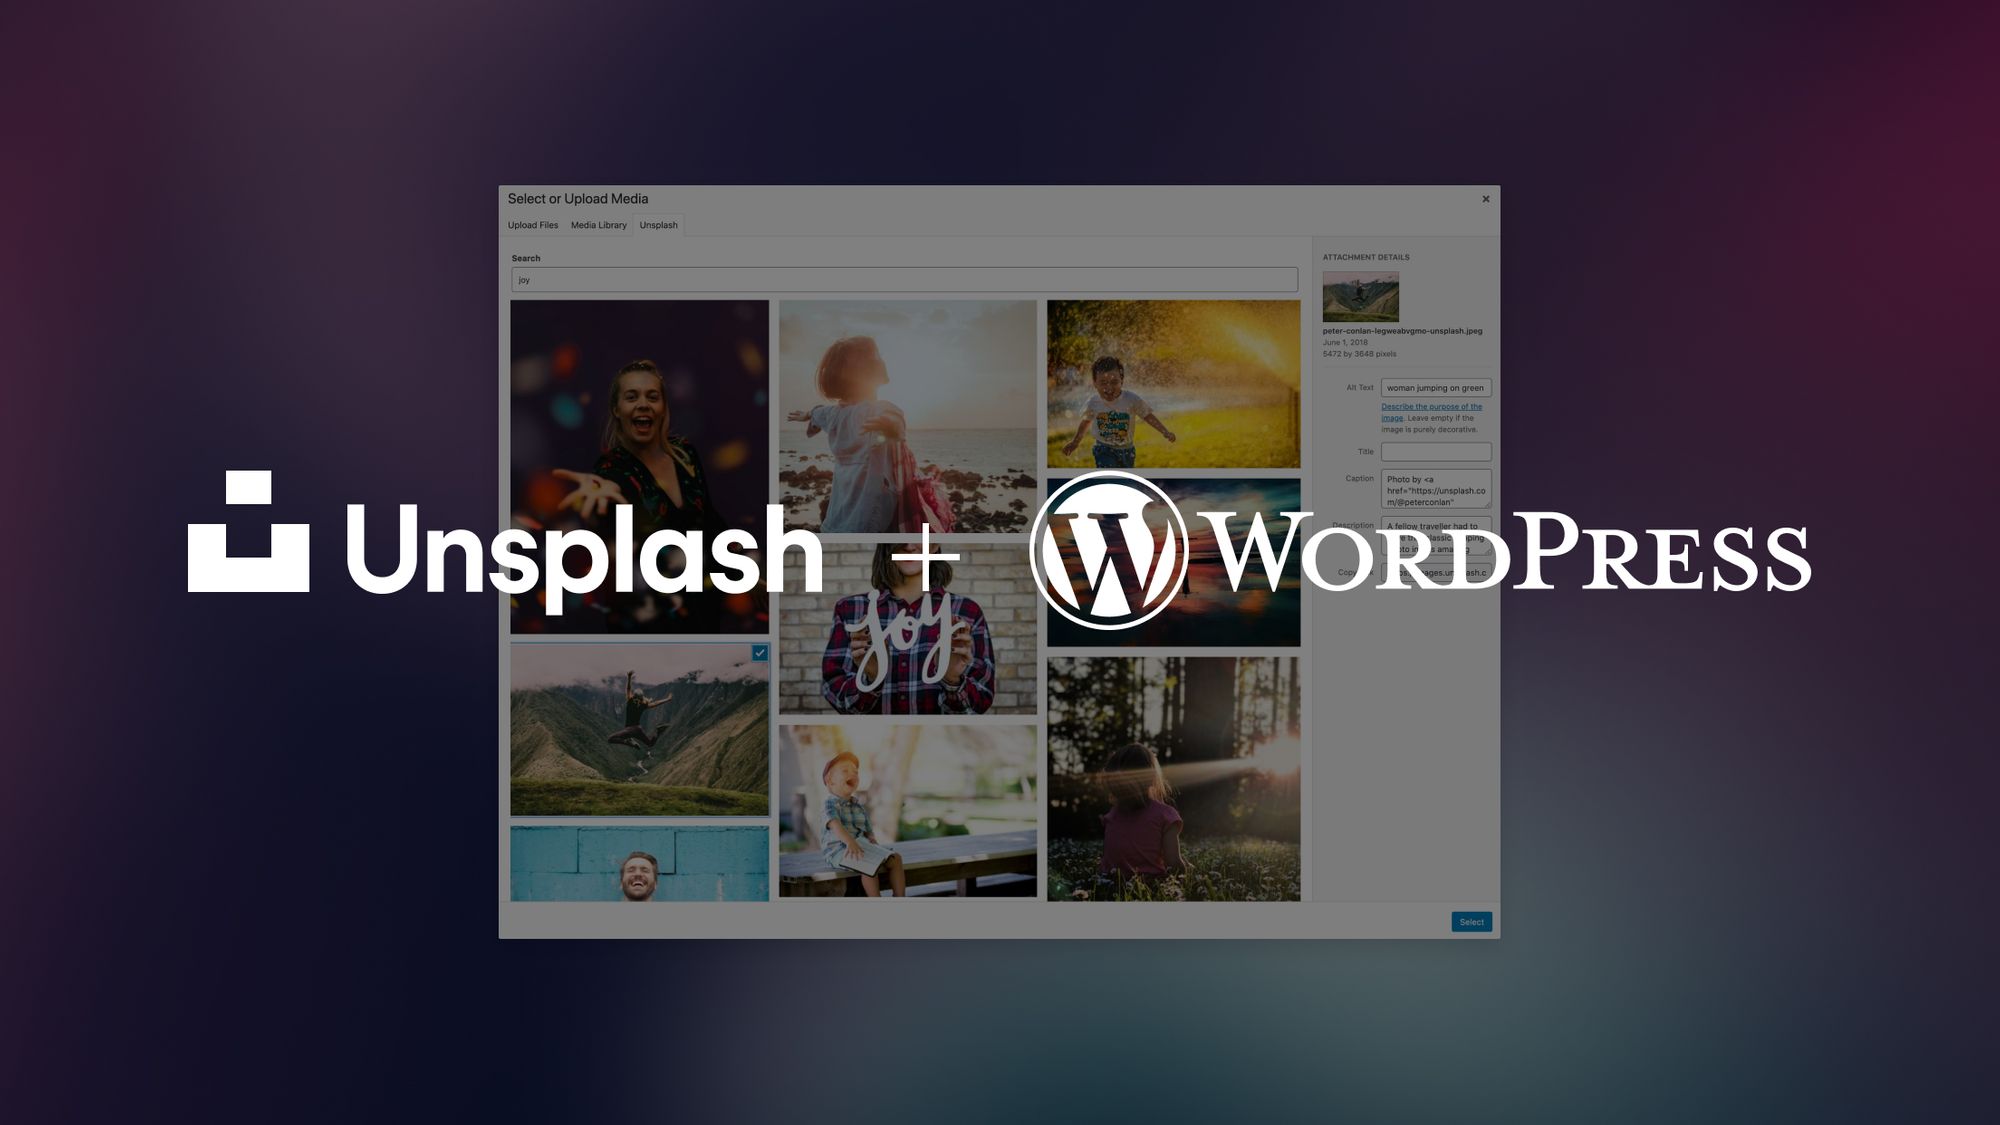 Unsplash logo + Wordpress logo